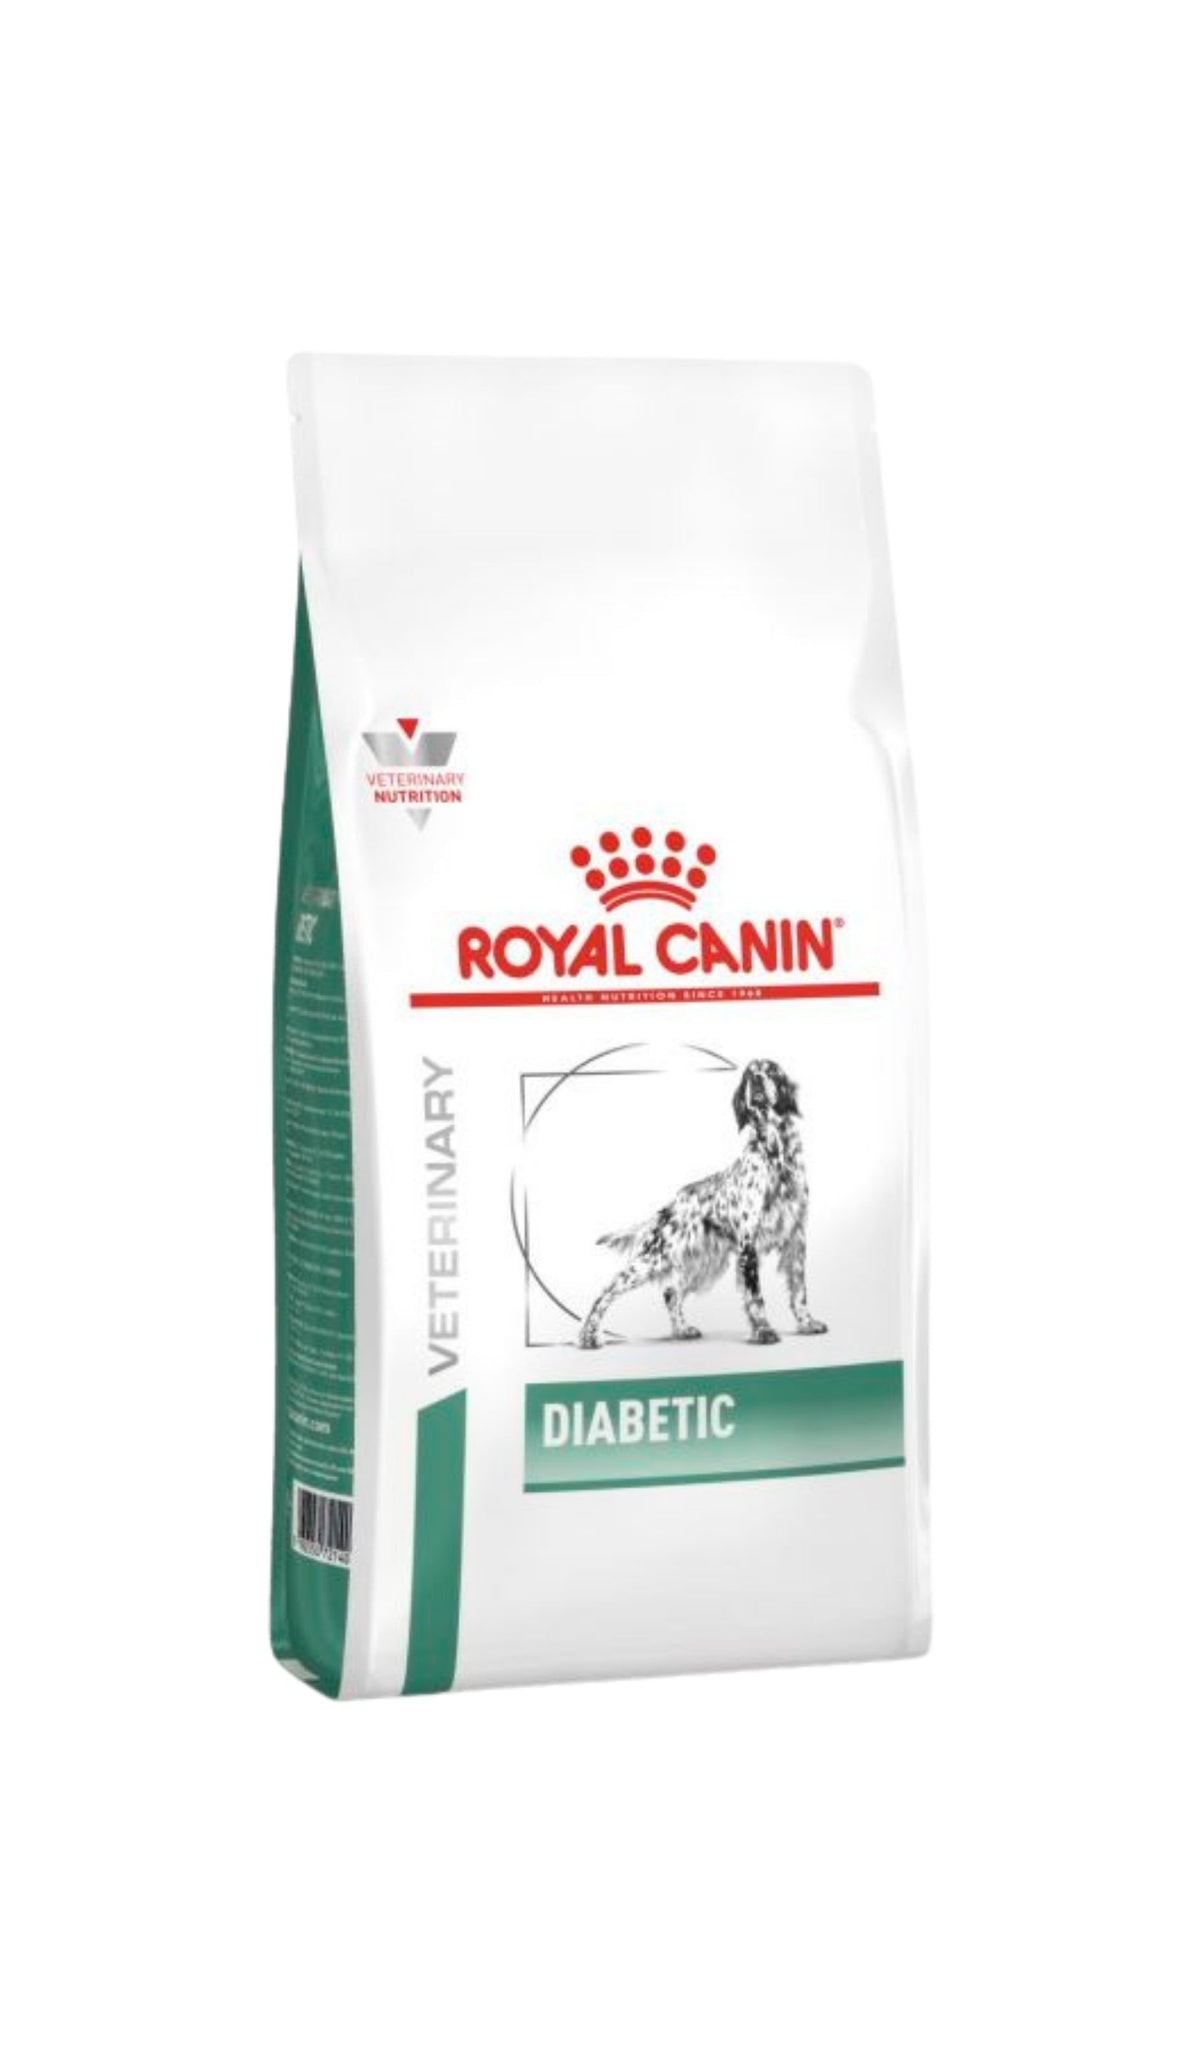 Royal Canin Diabetic Dog 1.5kg